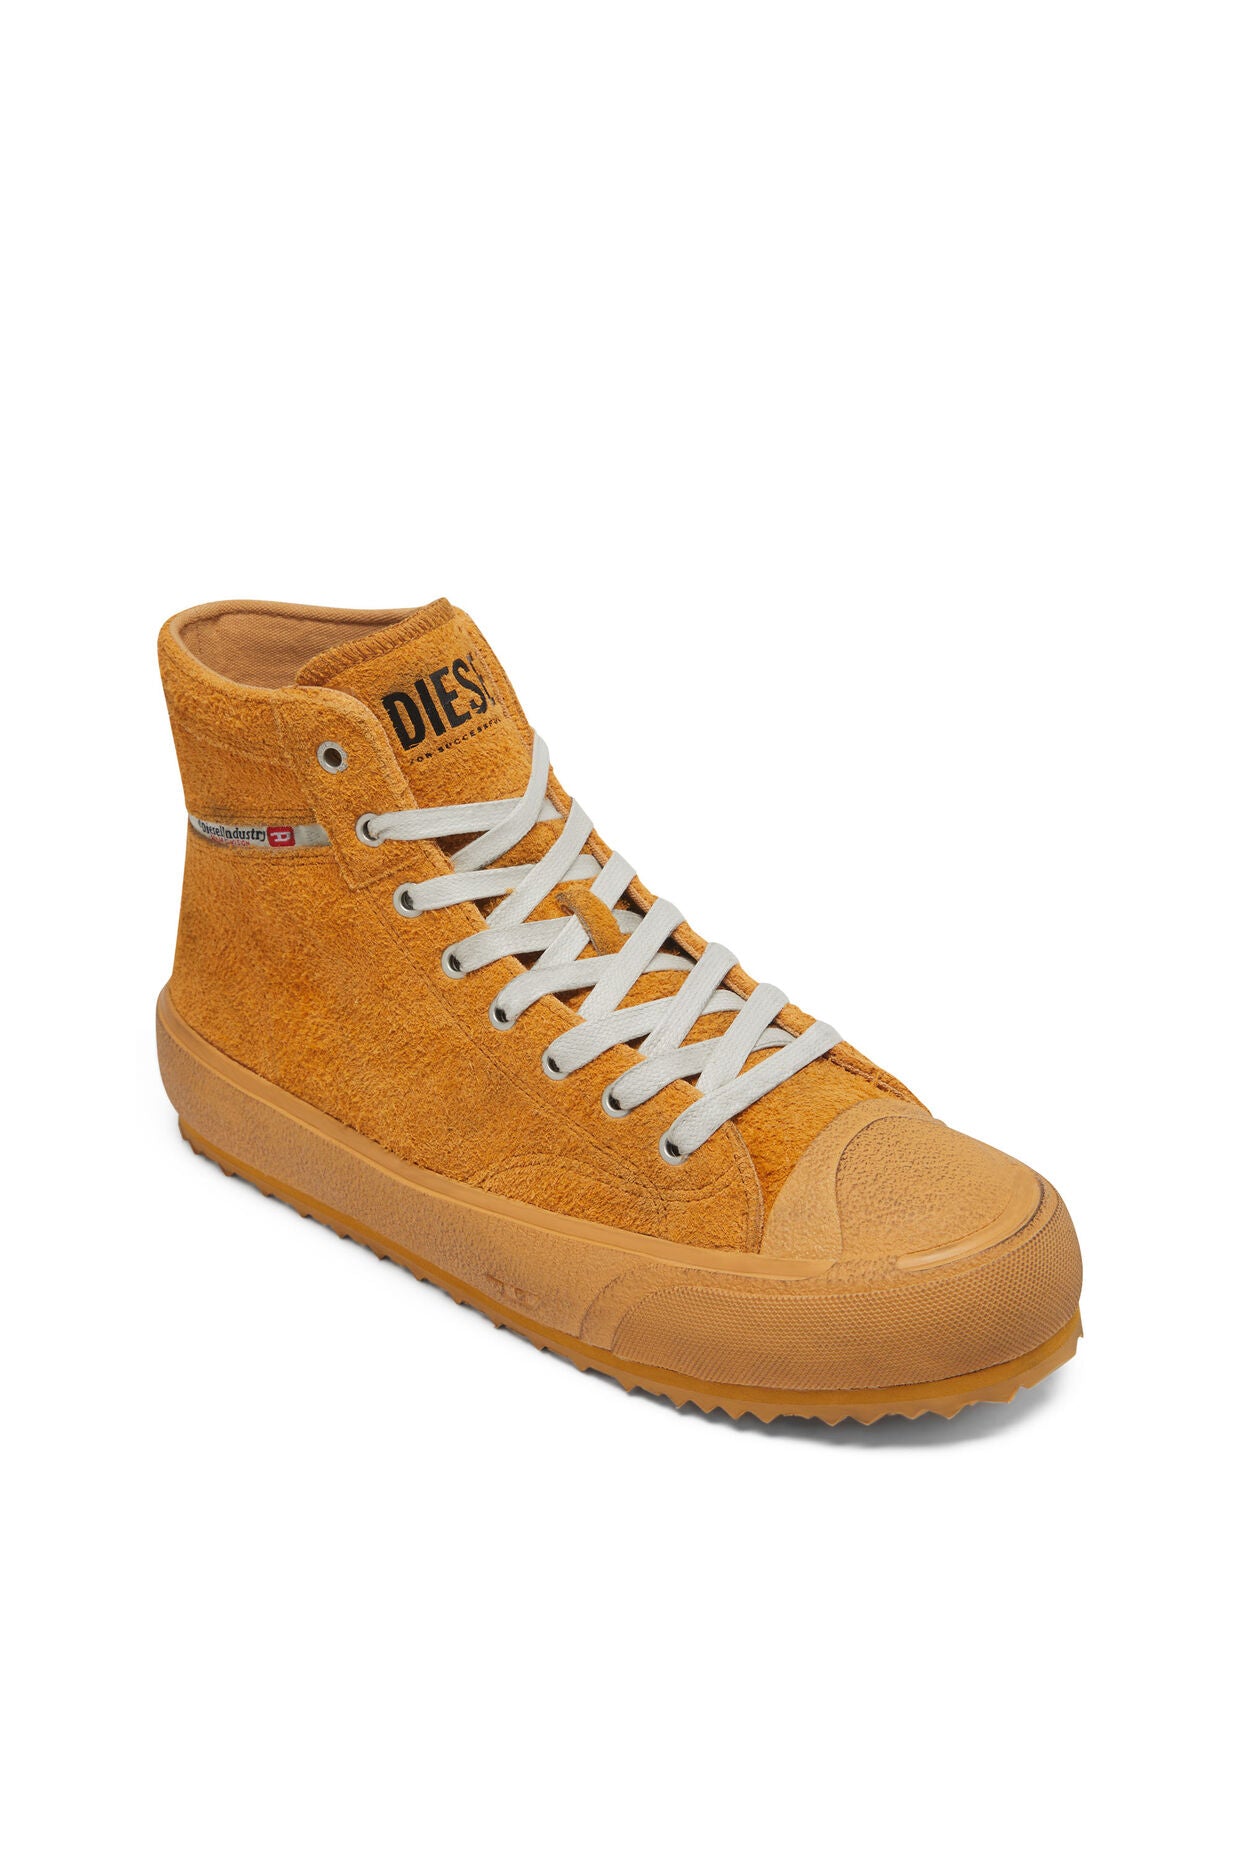 Diesel Y02966P5174 Unisex Principia Mid X Sneakers Honey Yellow